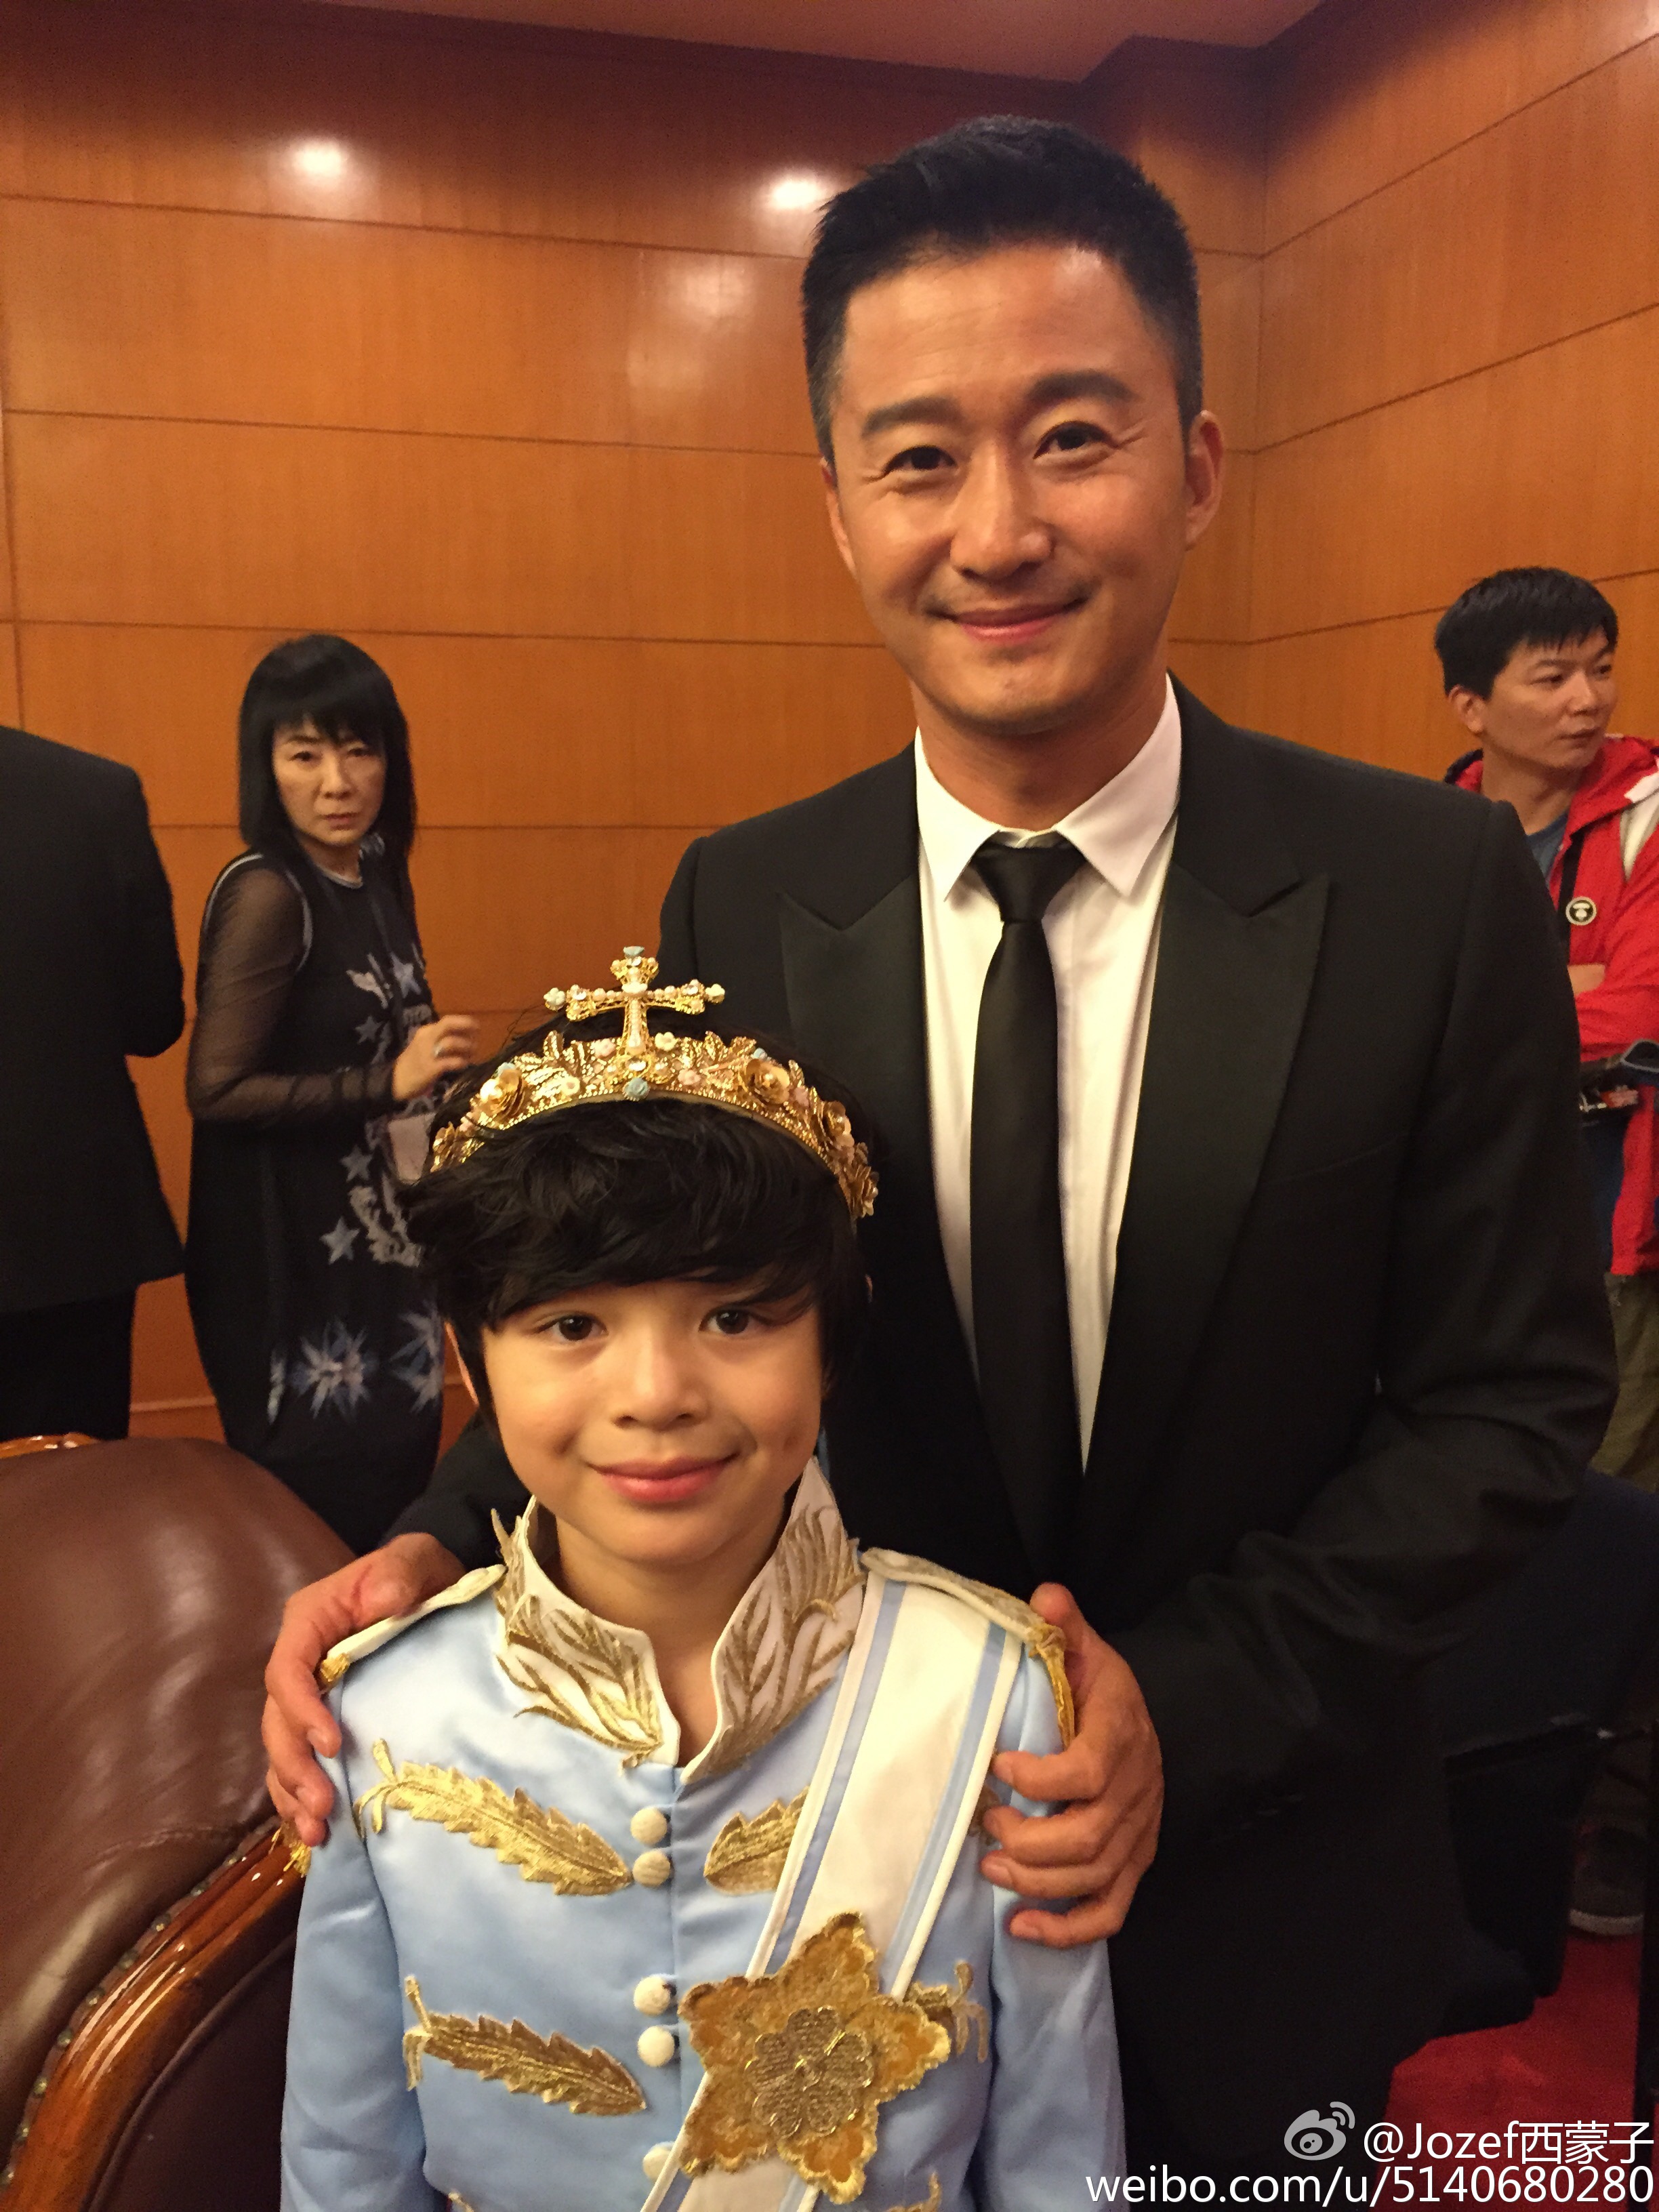 Wu Jing (吴京) & Jozef Waite (西蒙子) at the Shanghai International Film Festival 2015 - Jackie Chan Action Movie Week Gala Night.